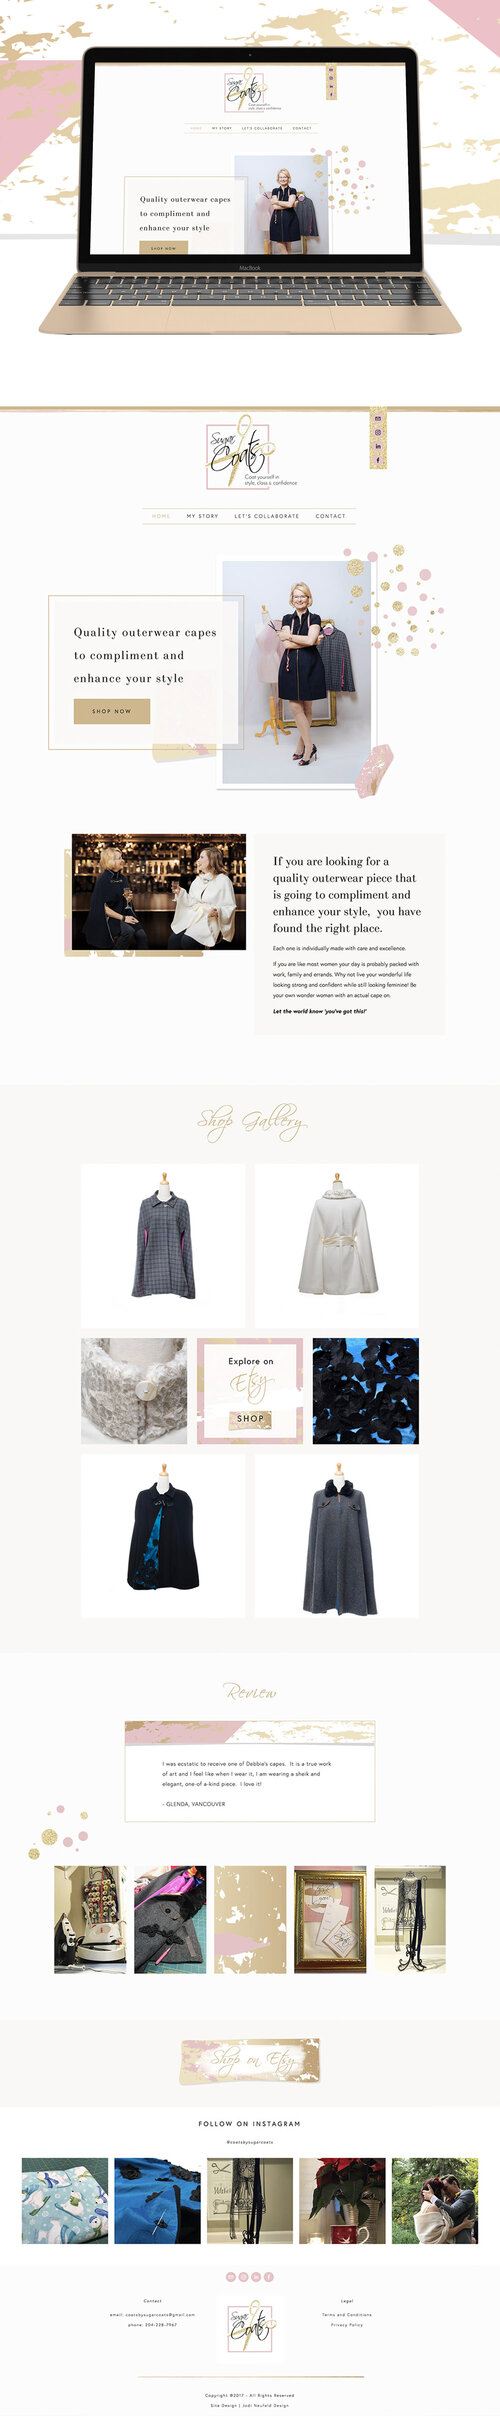 Sugar Coats website design — Jodi Neufeld Design | Squarespace web designer